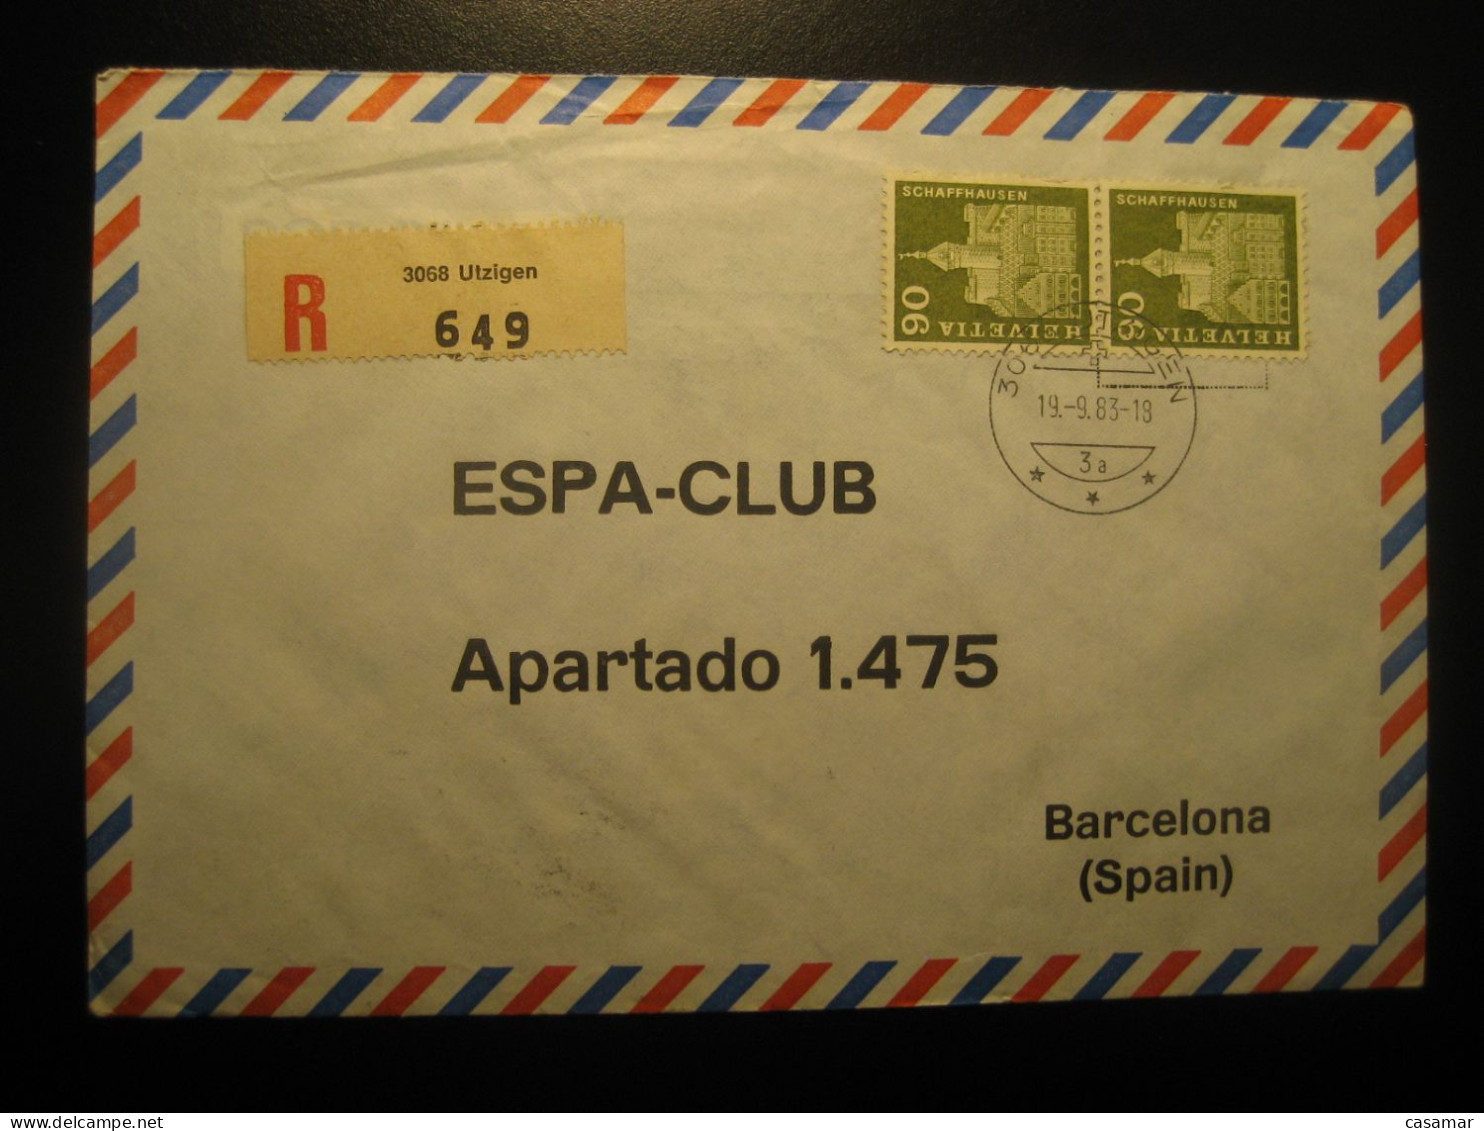 UTZIGEN 1983 Registered Air Mail Cancel Cover SWITZERLAND - Lettres & Documents